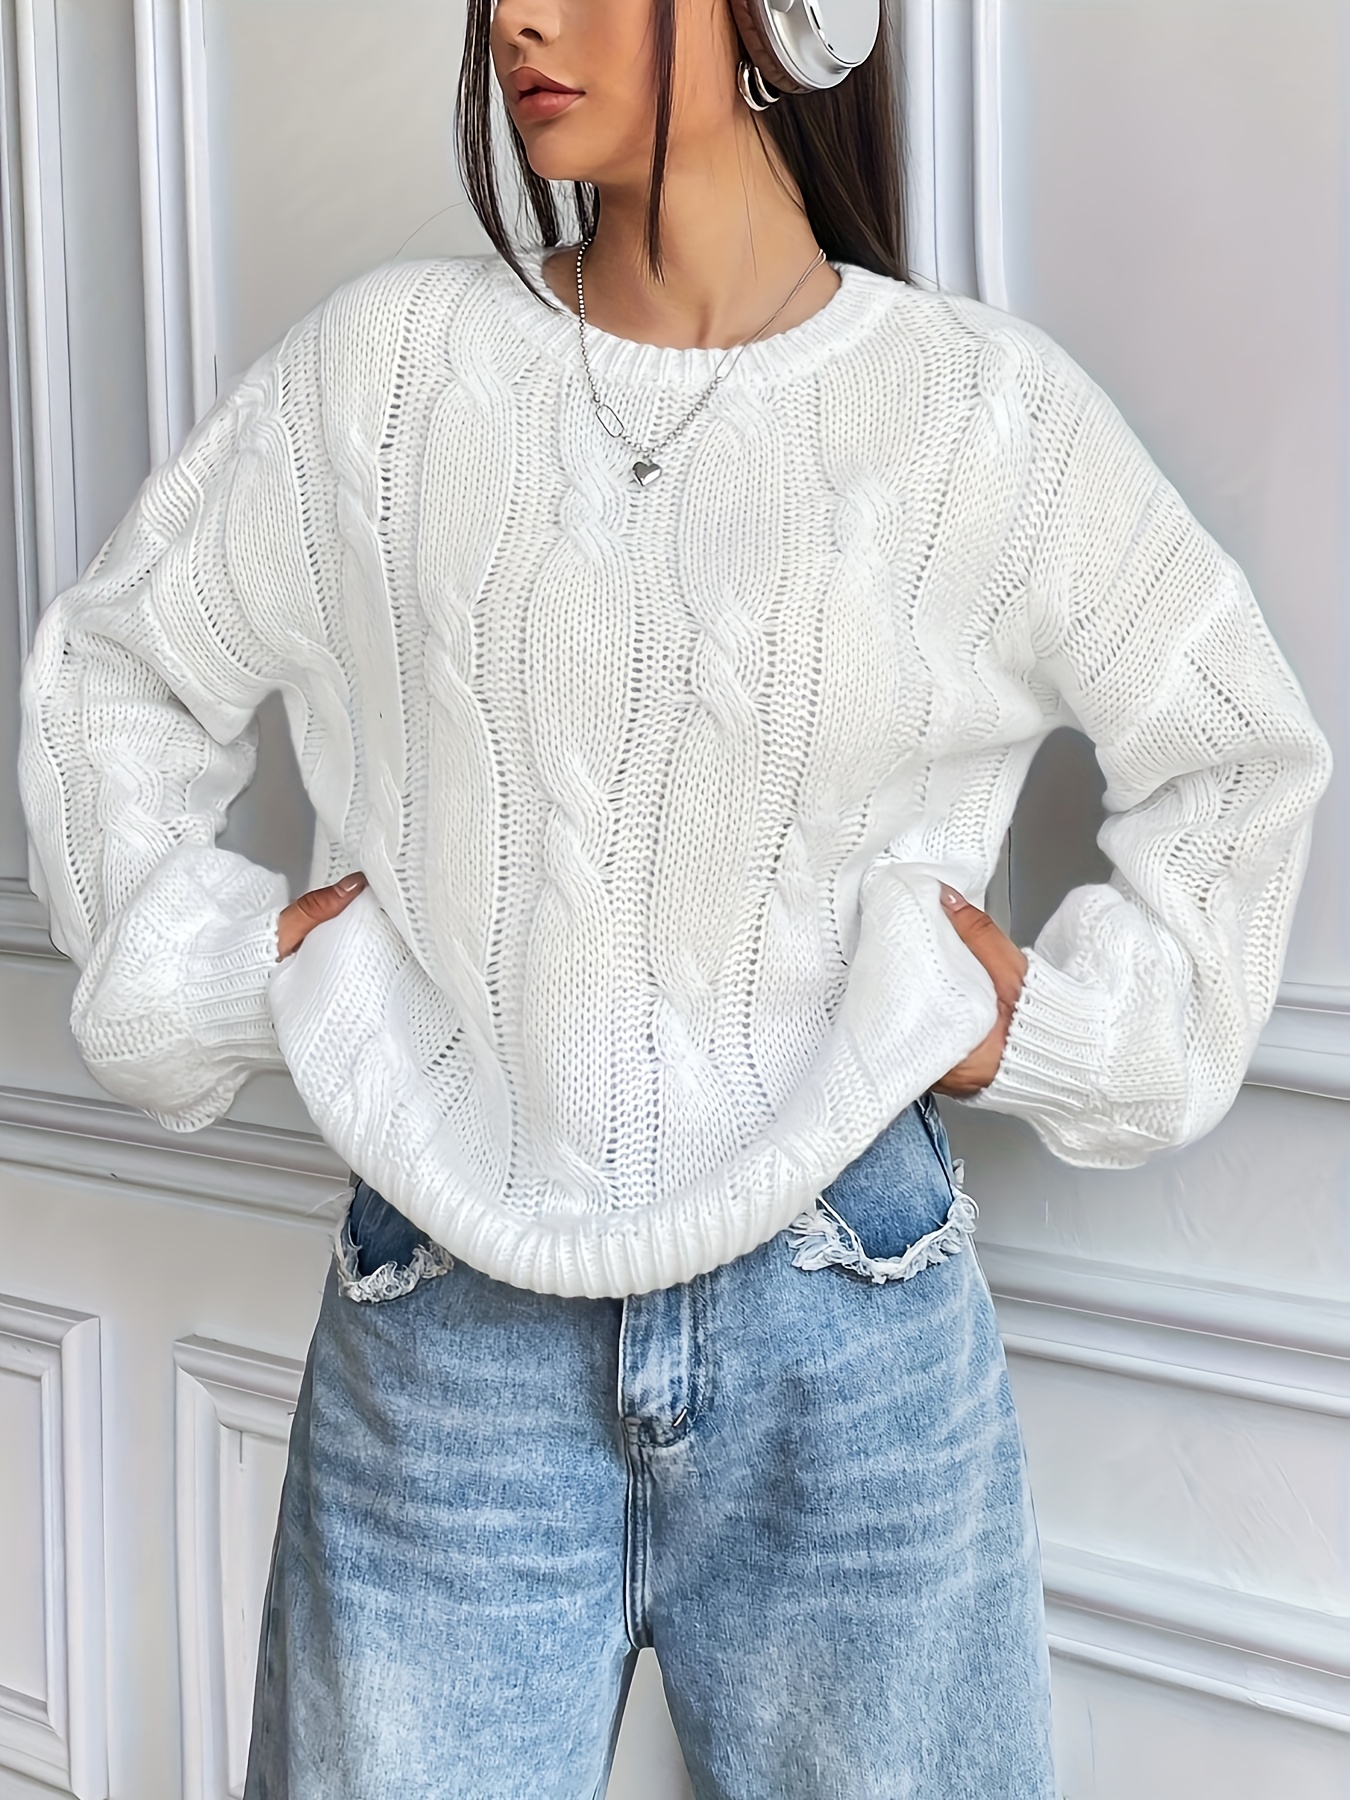 Twist Knit Sweater Women's Loose Crew Neck Long Sleeve Pullover